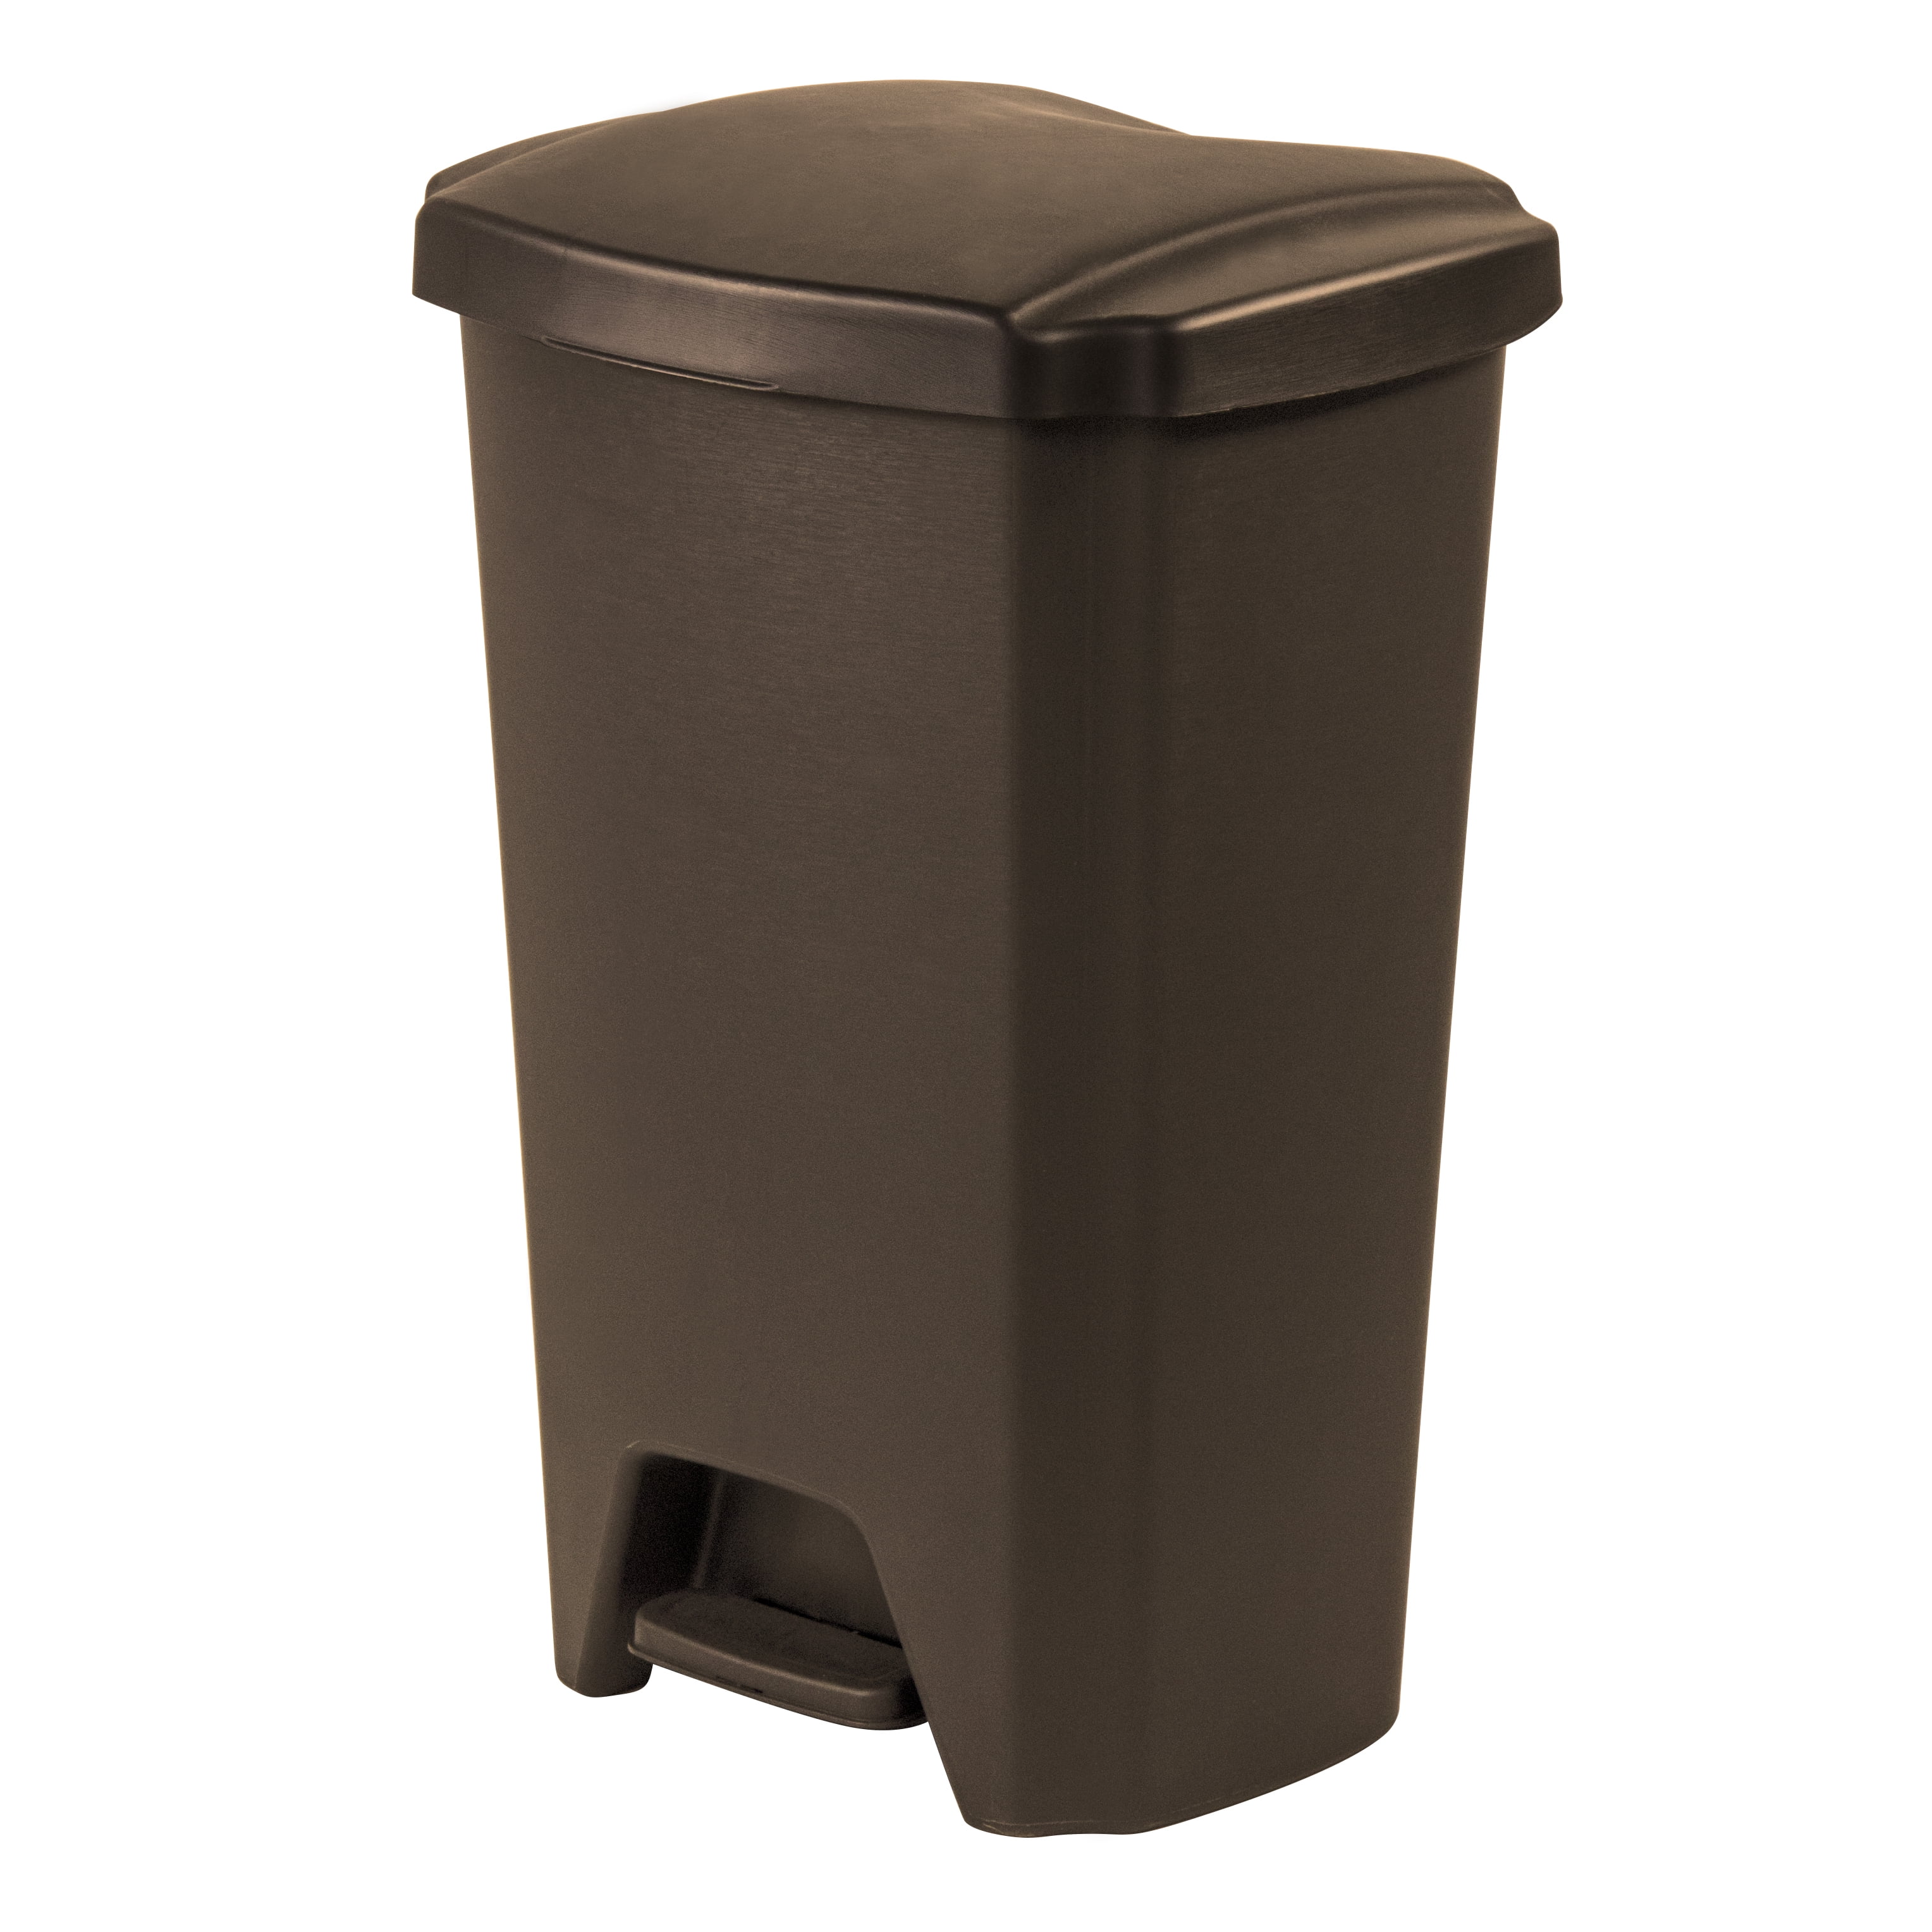 Trash Cans & Recycle Bins - Walmart.com - Hefty 13-Gallon Step-On Trash Can